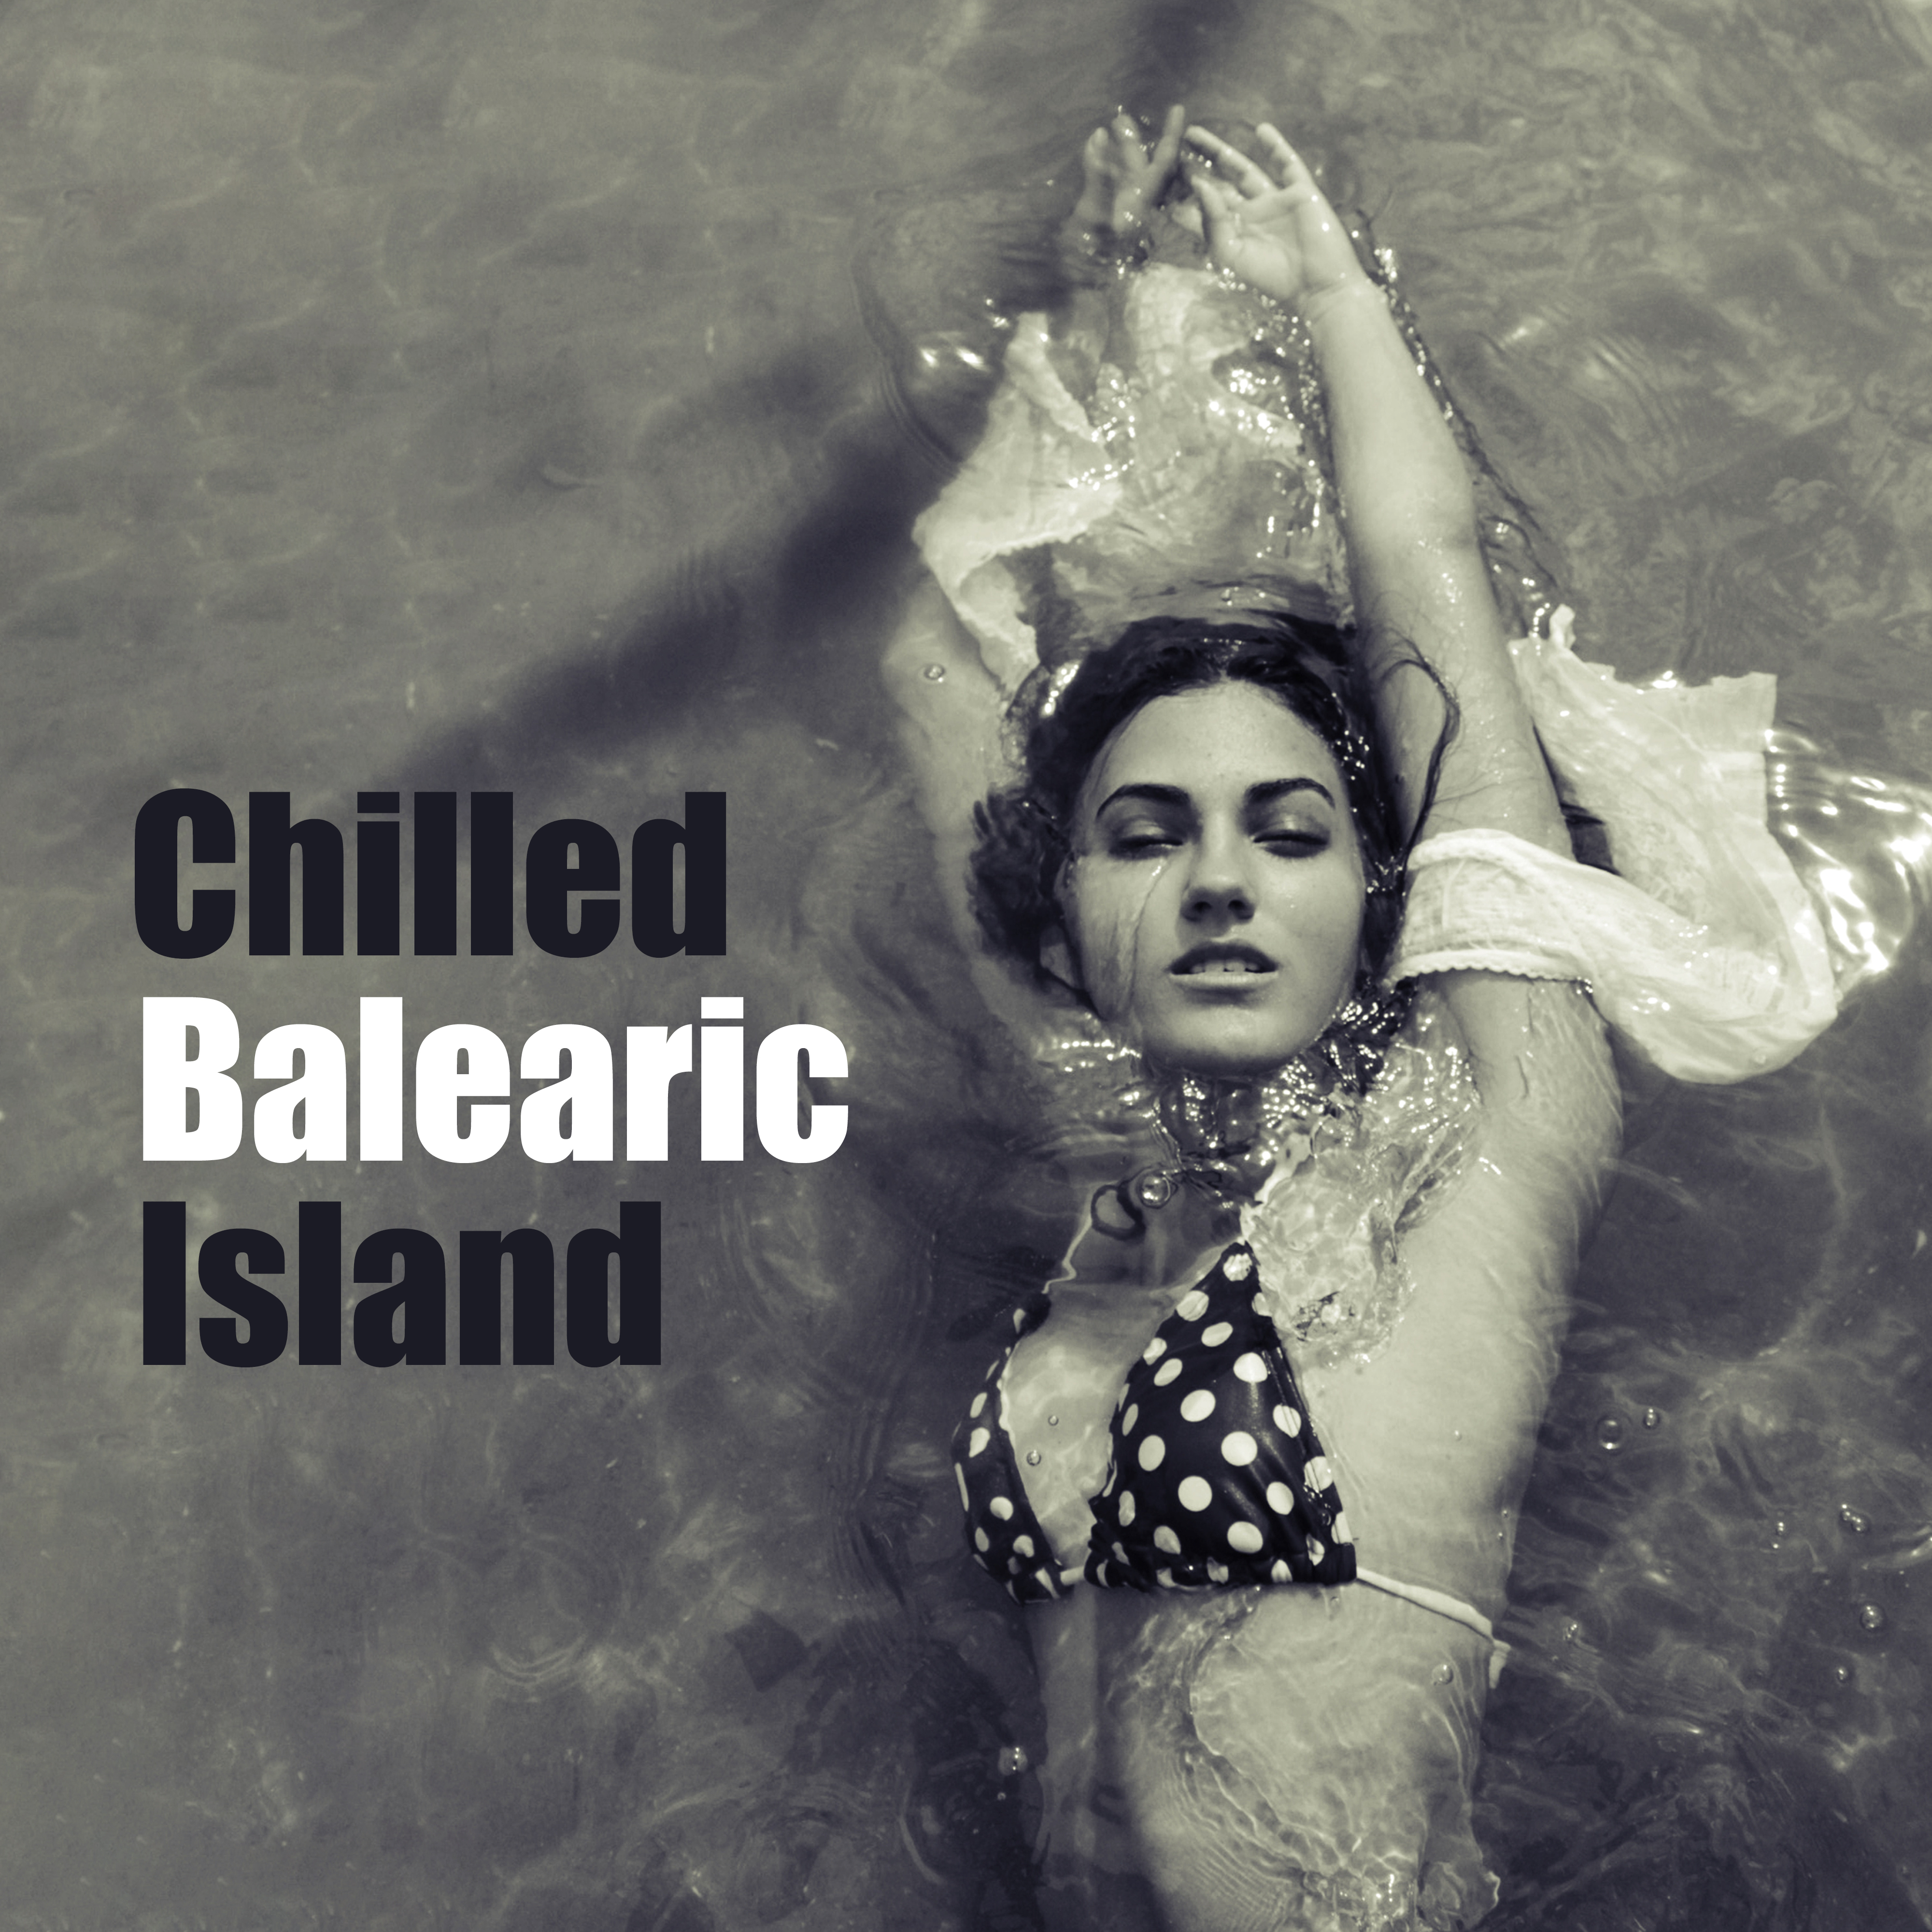 Chilled Balearic Island